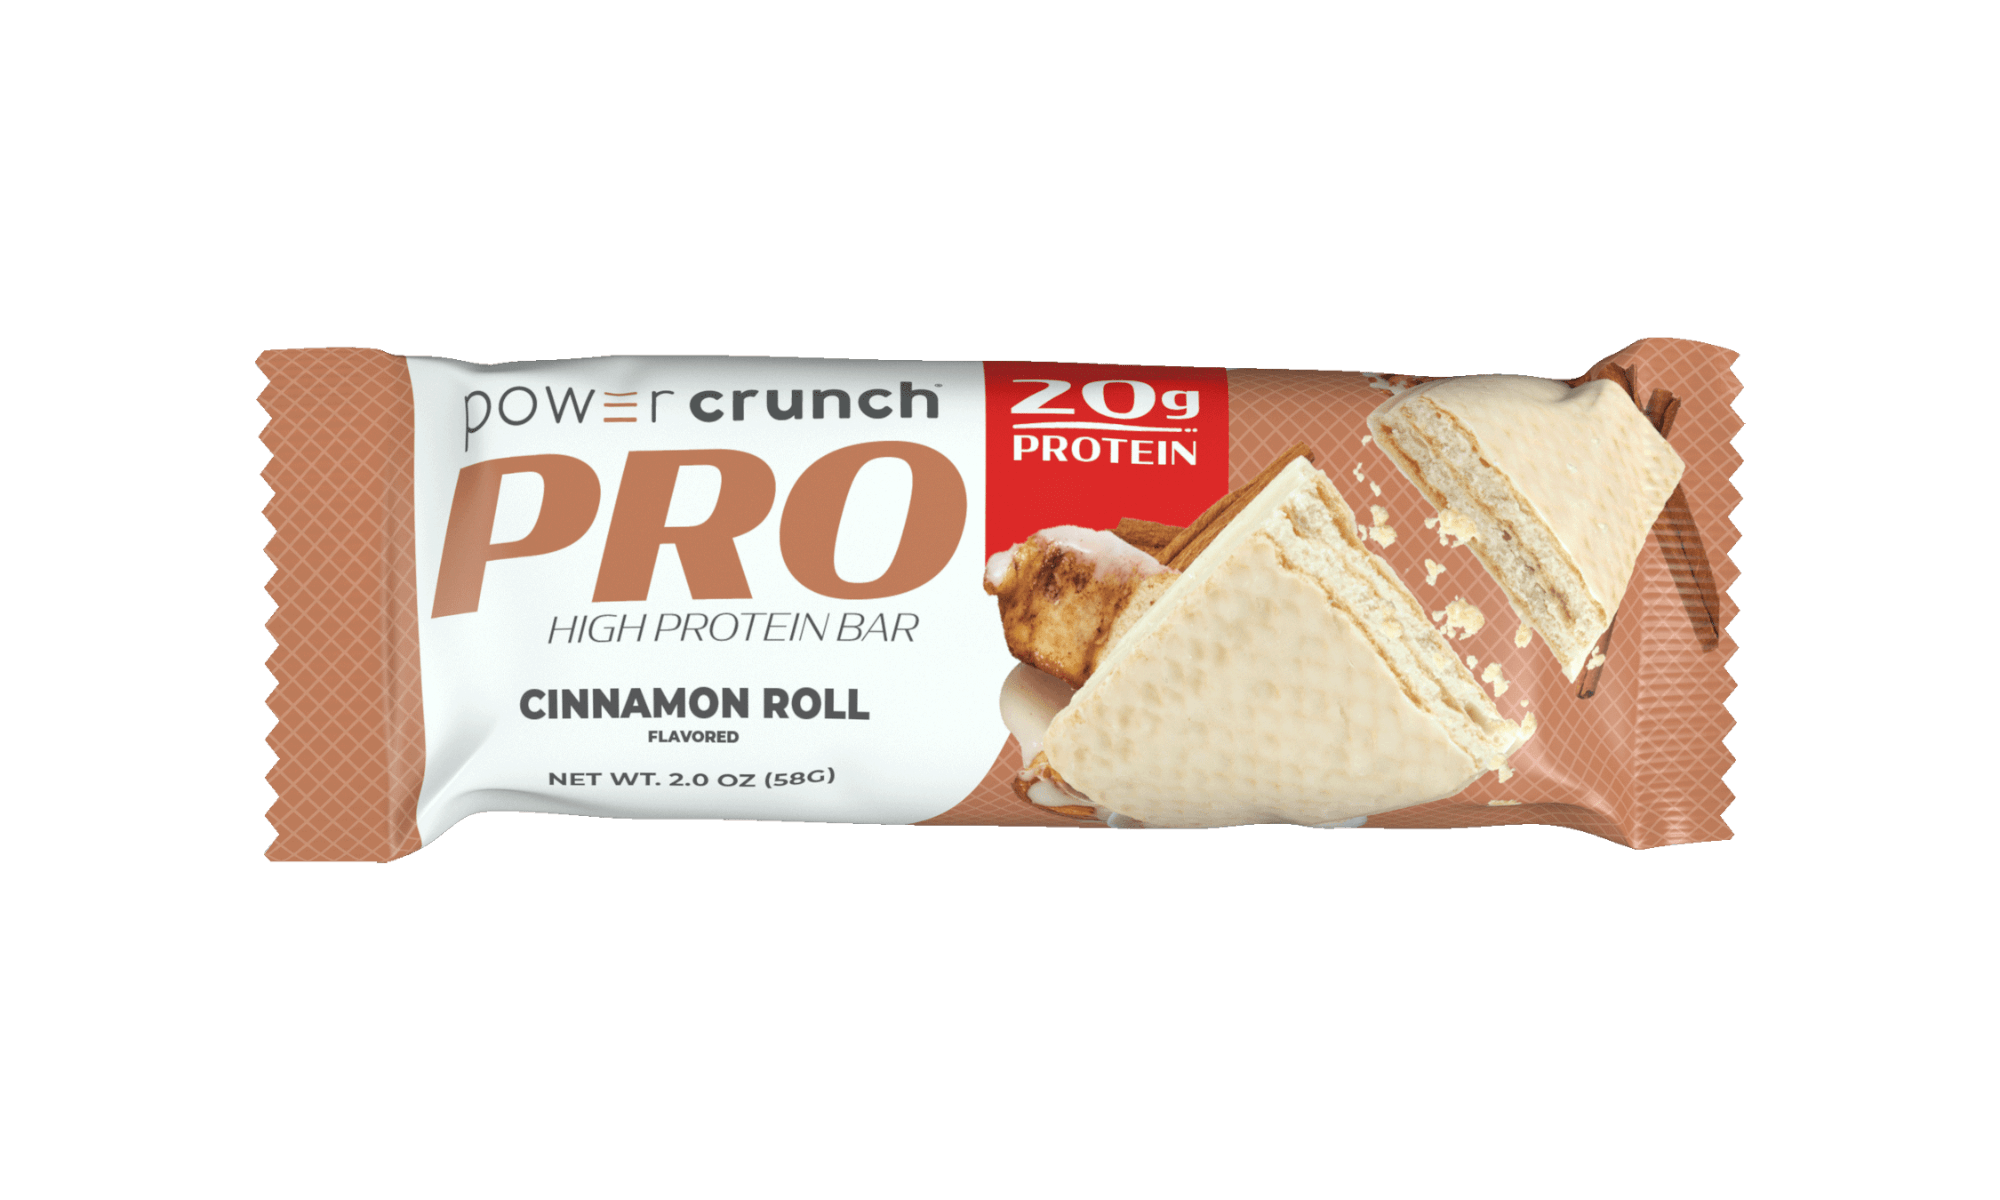 cinnamon roll high protein bars 20g protein